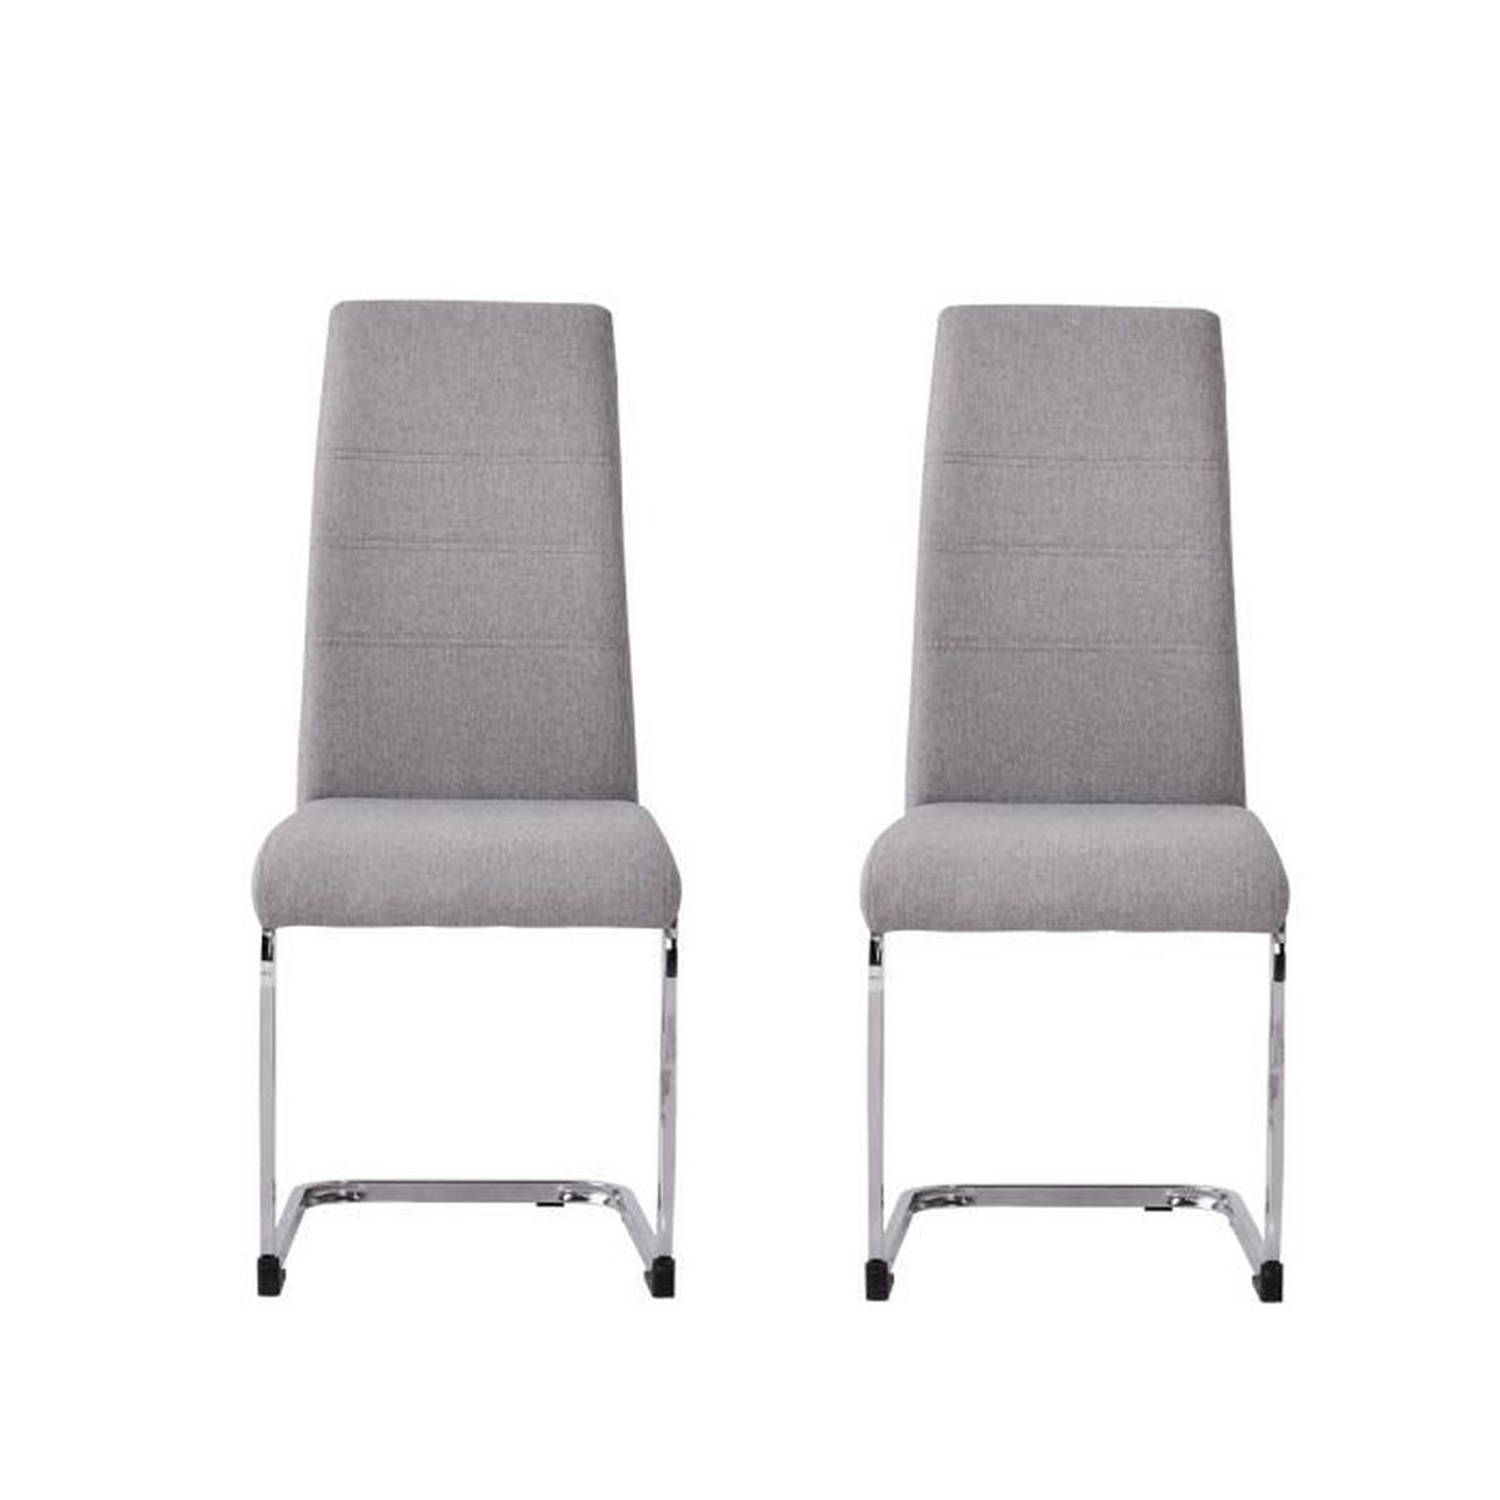 JANE Set van 2 stoelen - Chromen poot - Grijze stof - L 42 x D 56 x H 99 cm